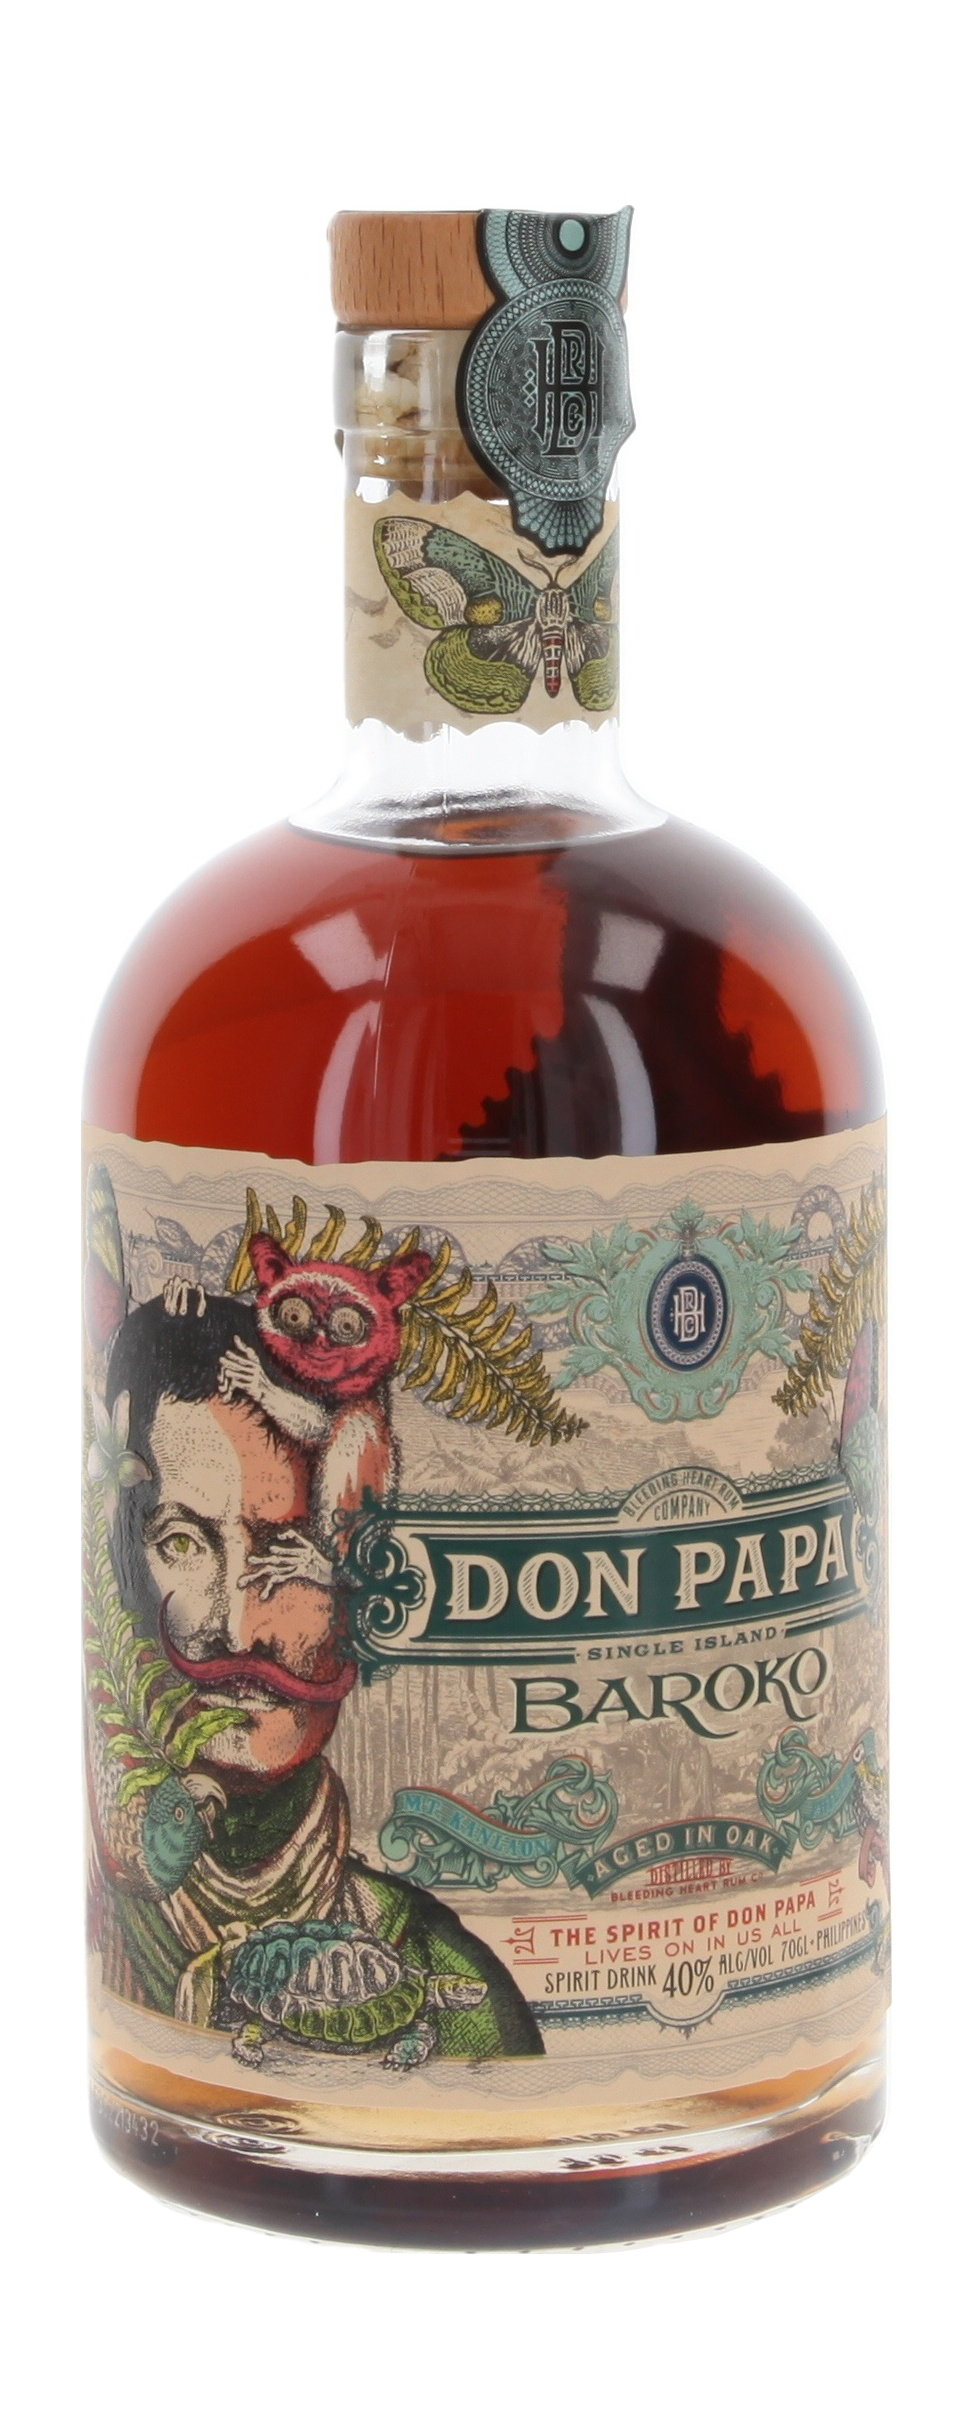 Don Papa Baroko Rum Spirit To Whisky.de the online store » 